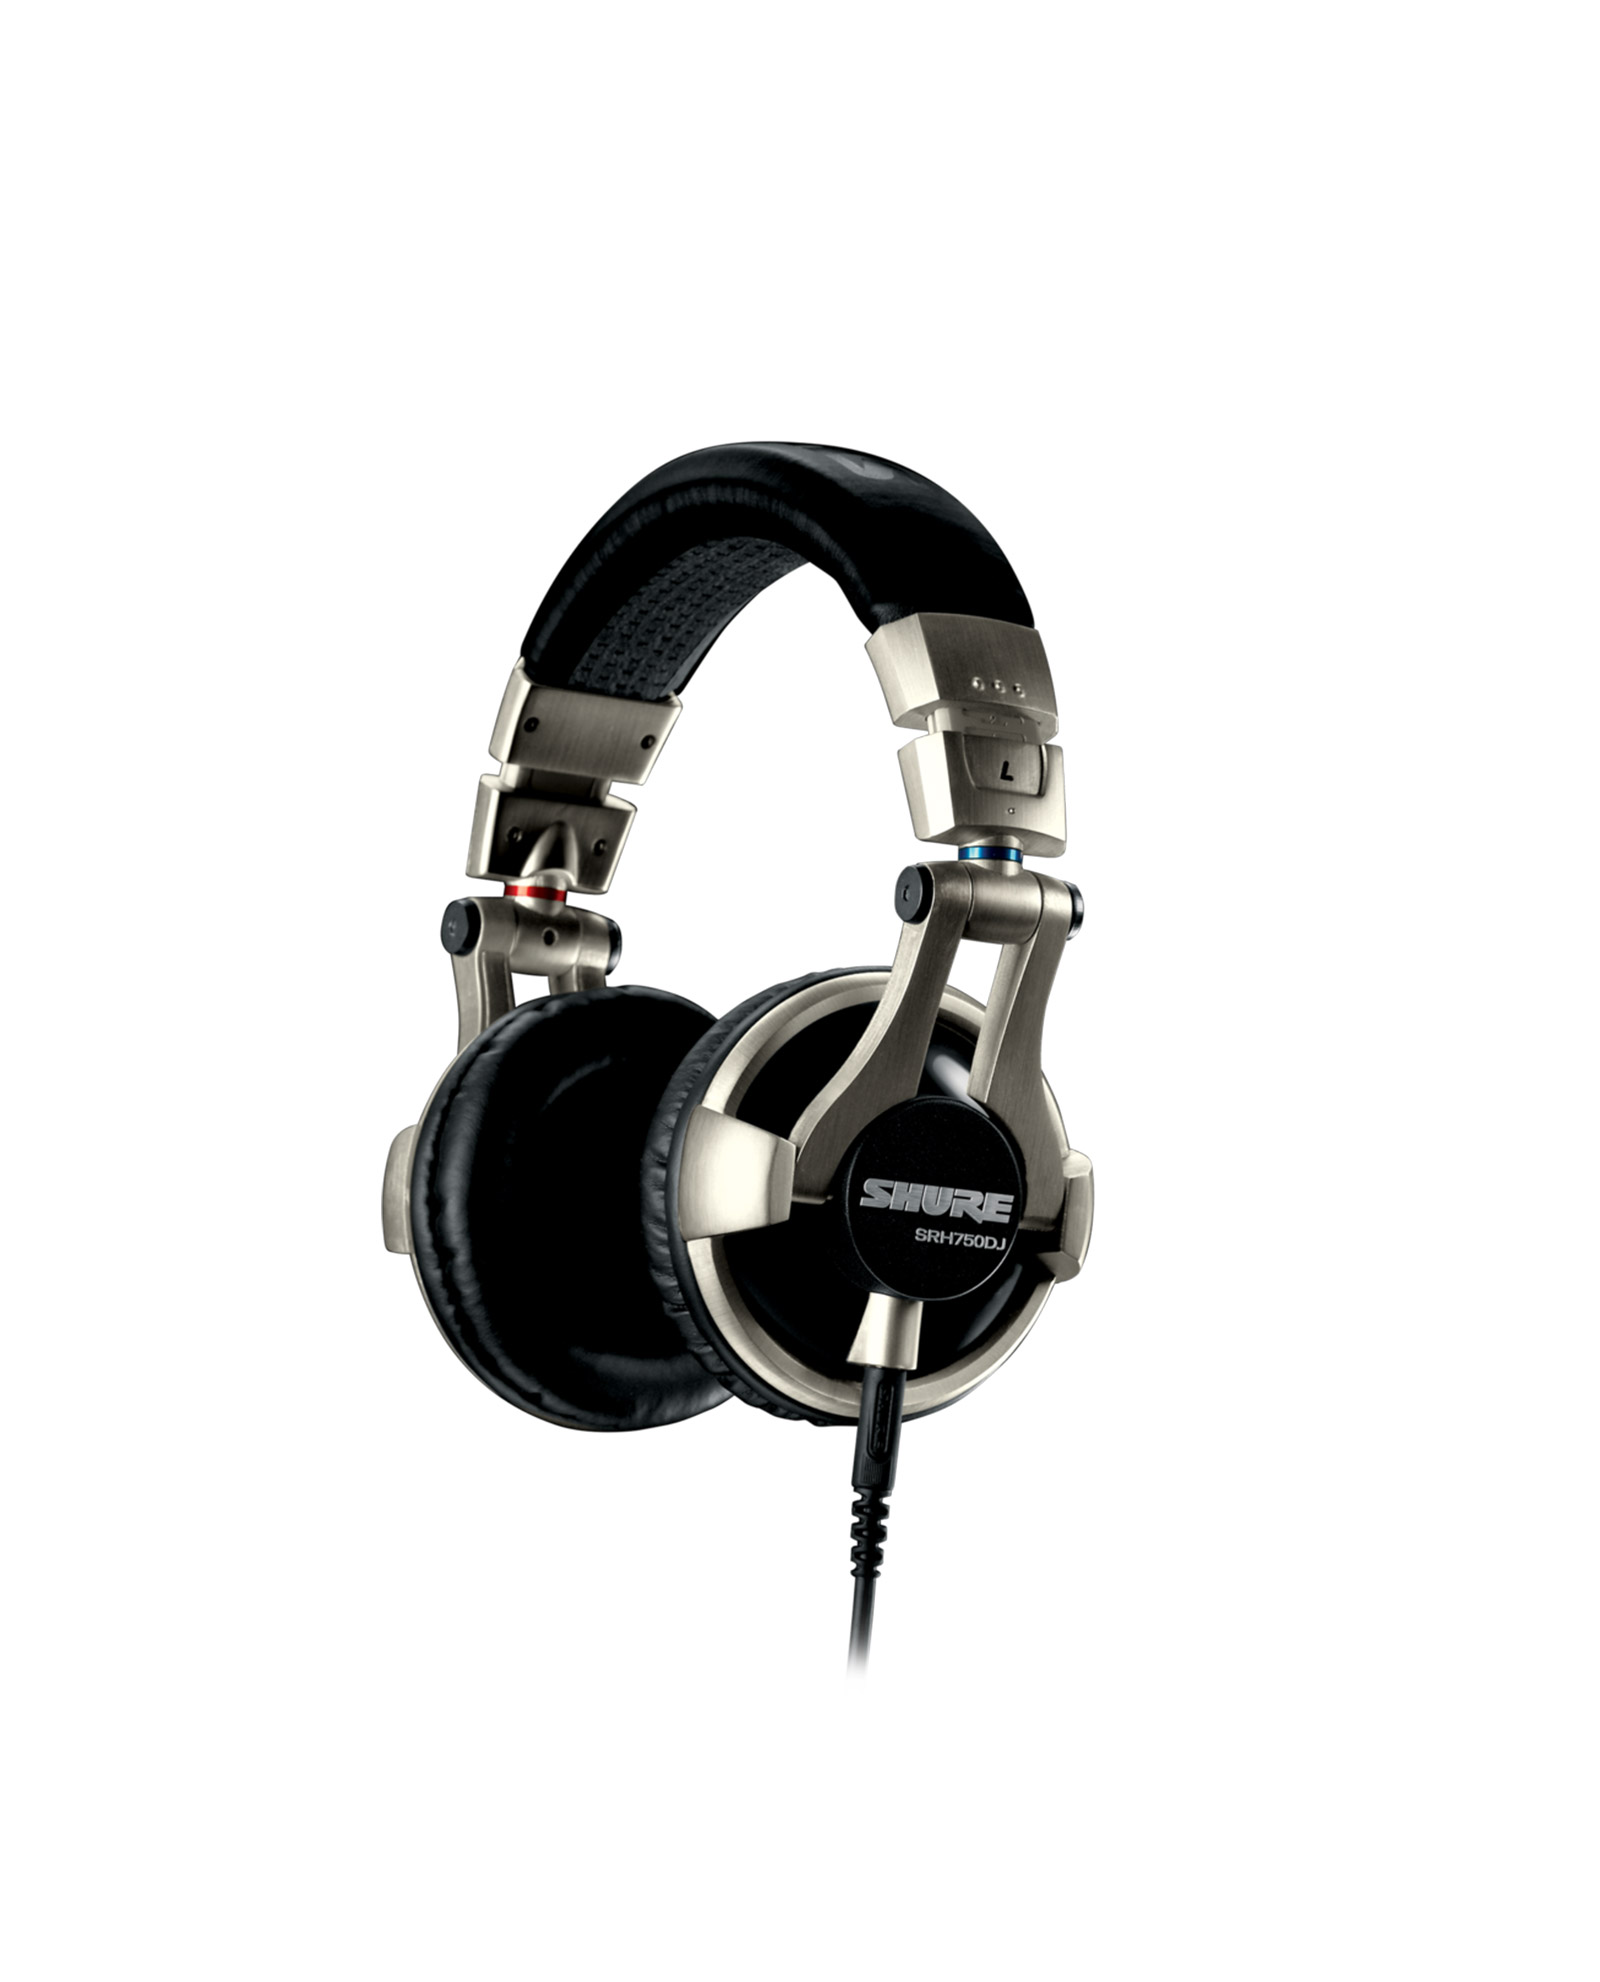 Shure Srh750dj Professional Dj Headphones 2